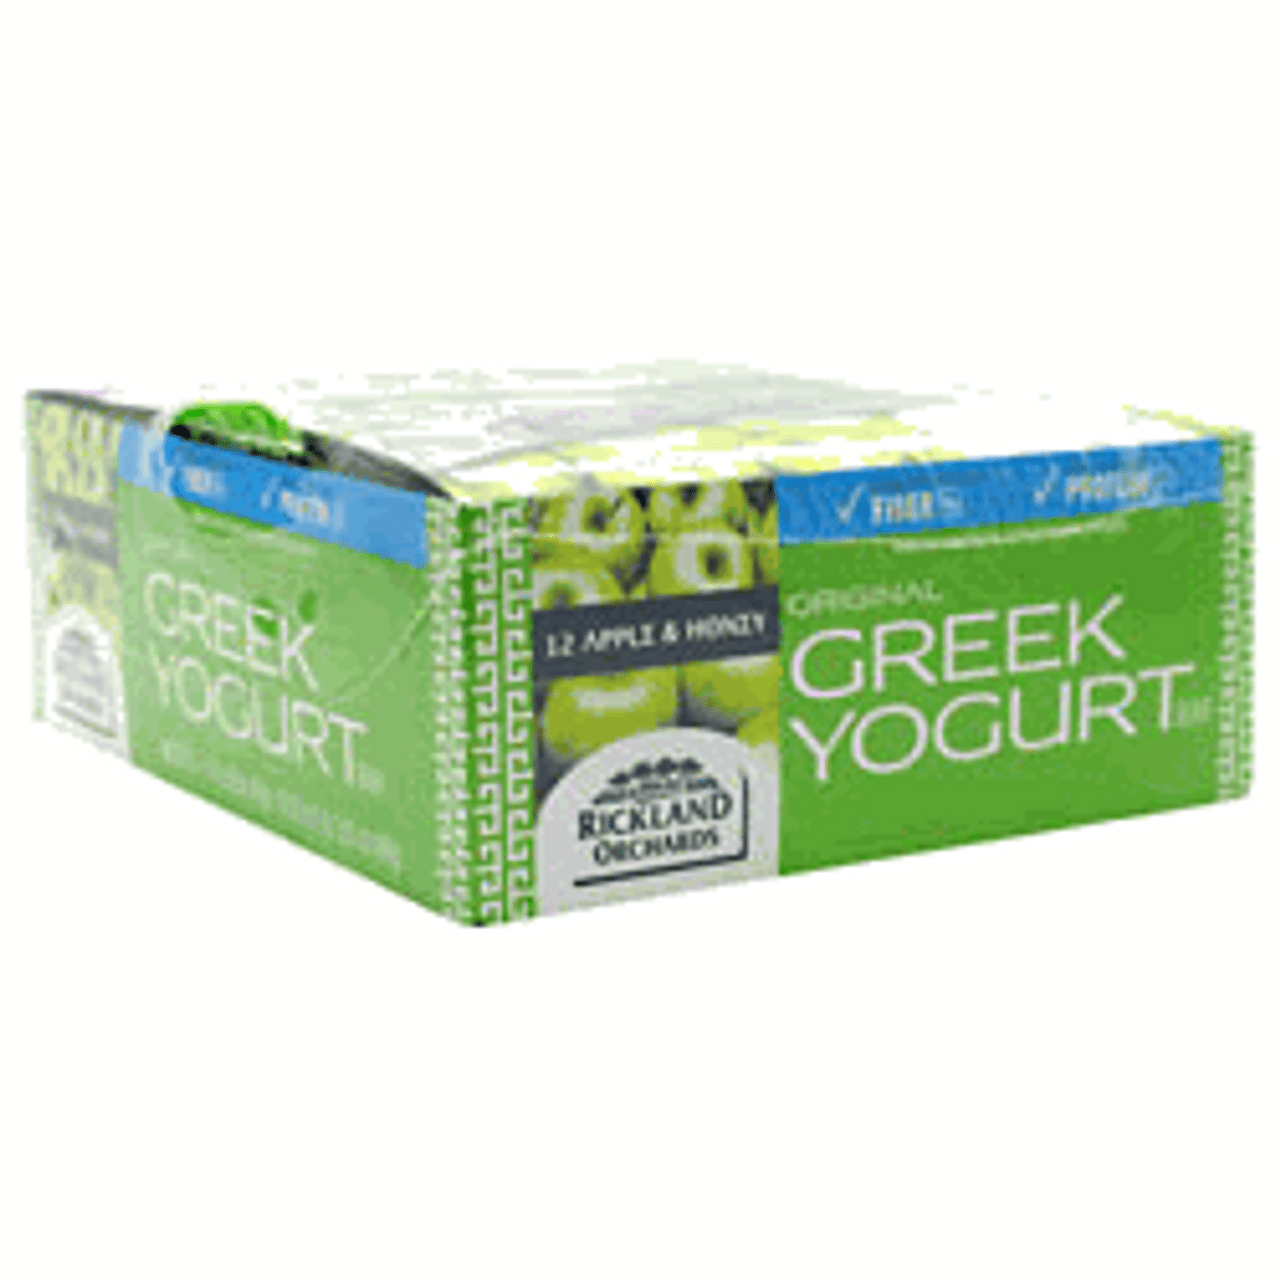 Greek Yogurt Bar 12pk Rickland Orchards